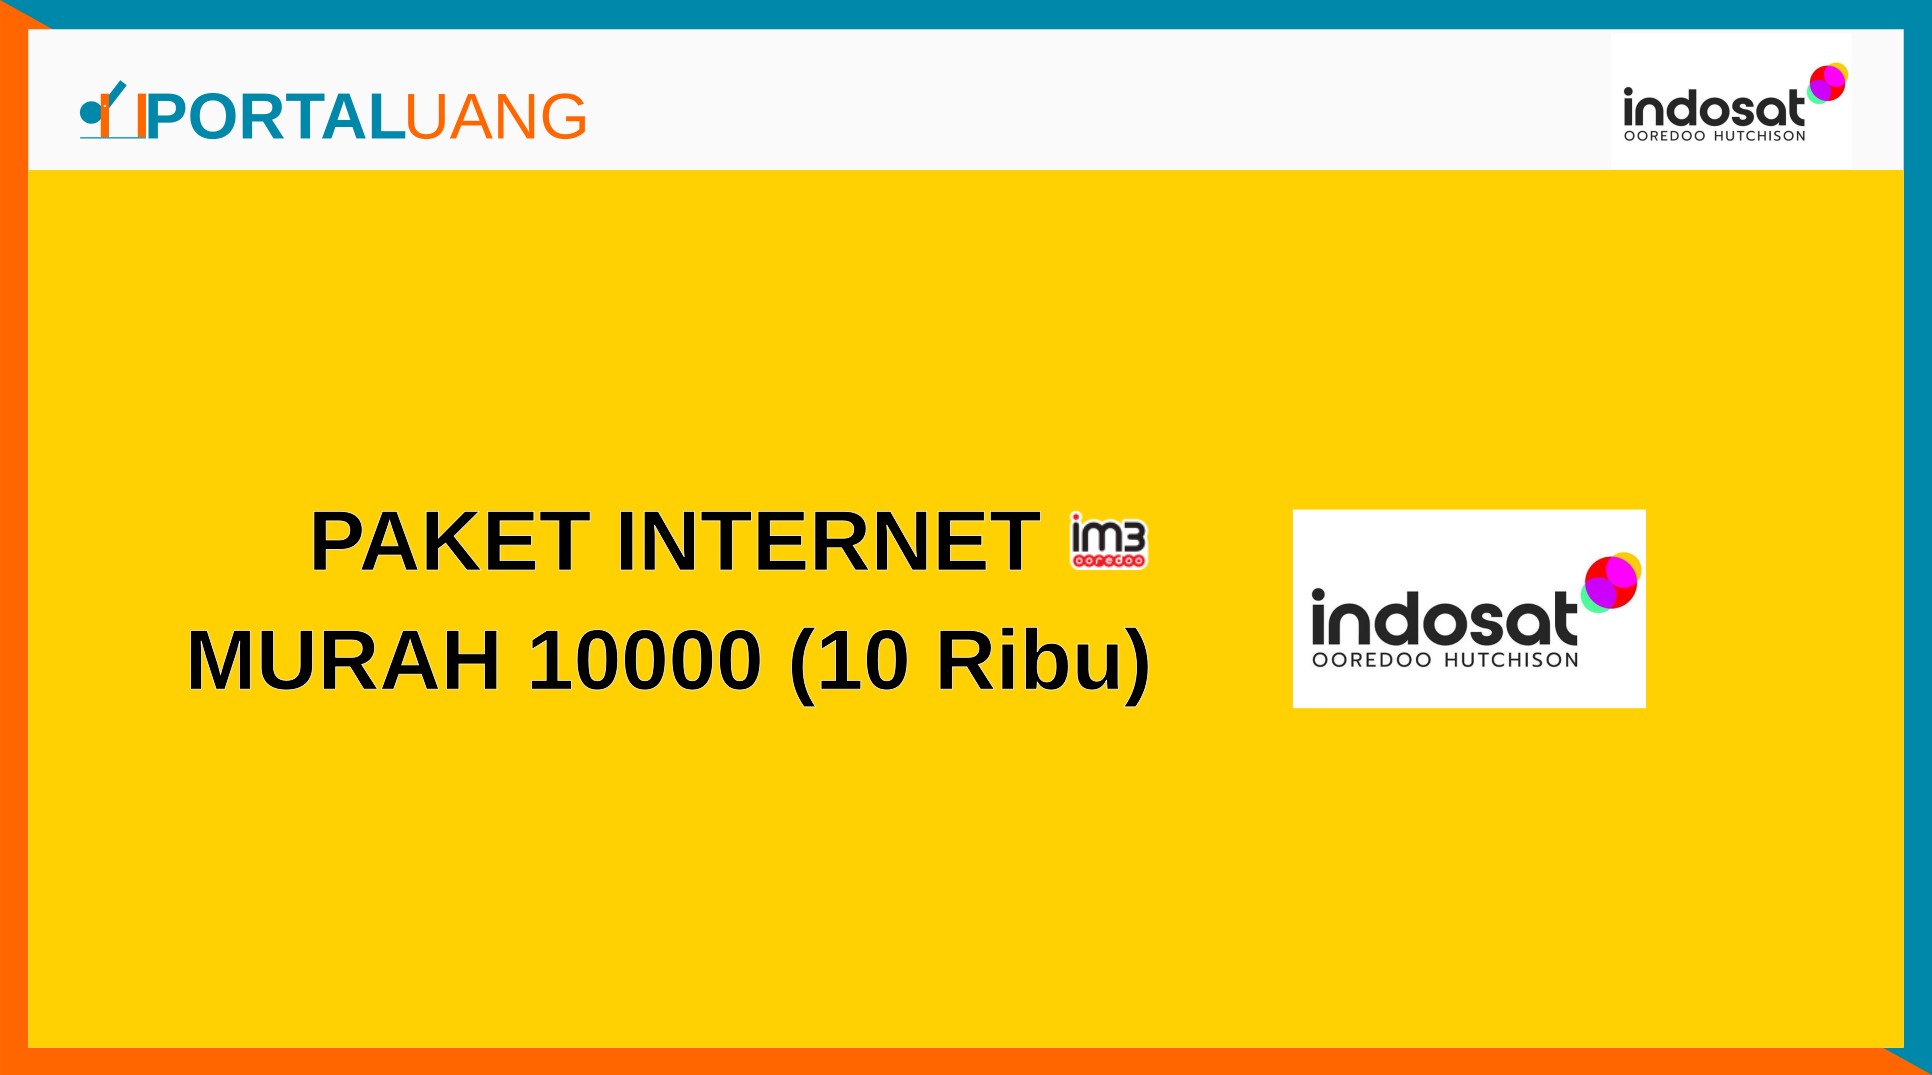 Paket Internet Indosat (IM3) Murah 10000 (10 Ribu)